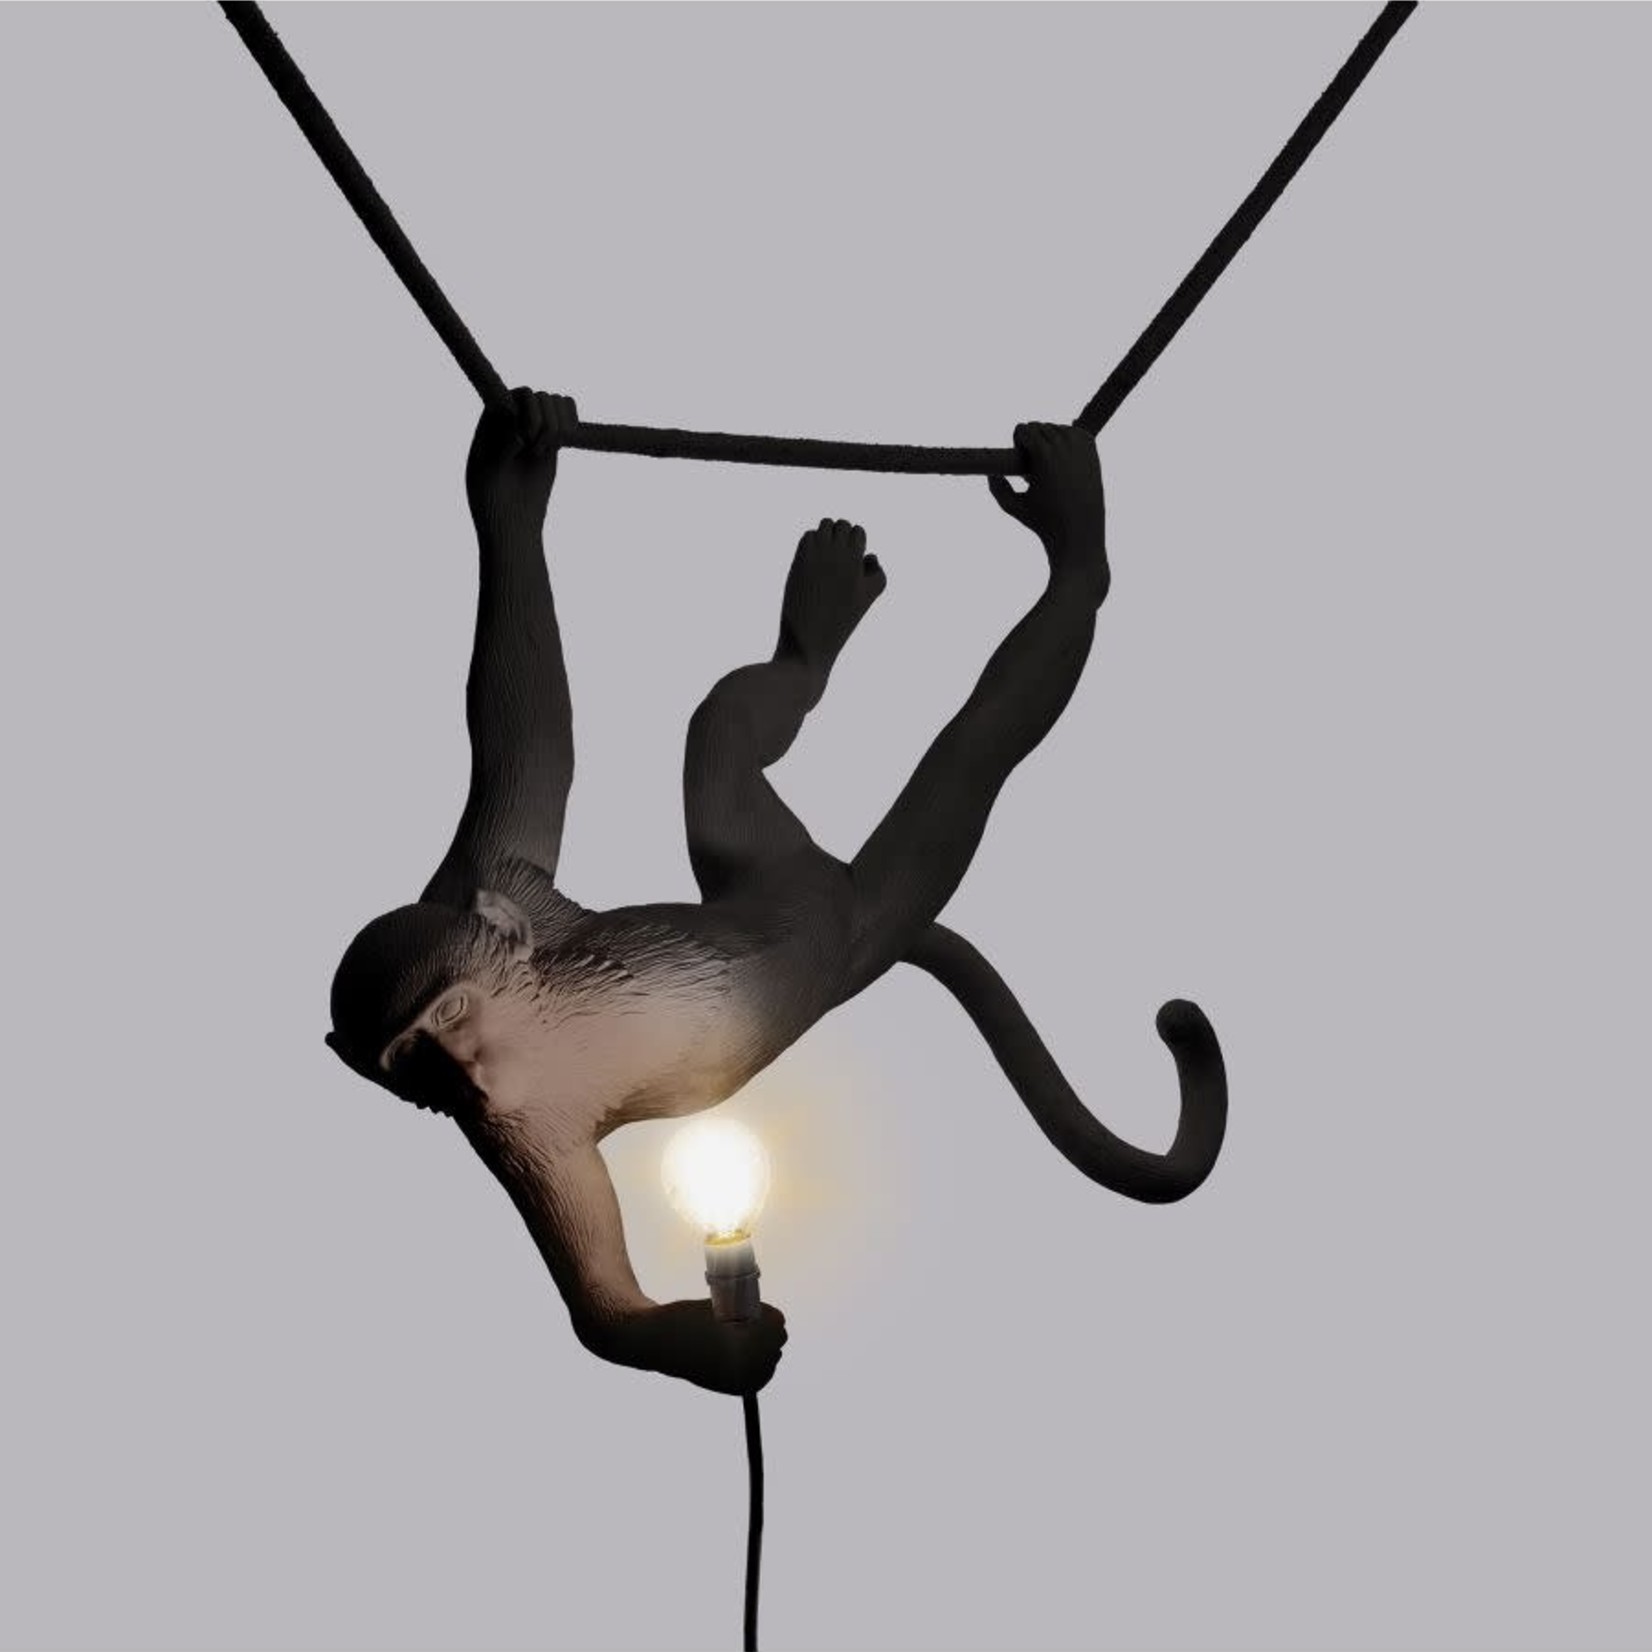 SELETTI SELETTI - The Monkey lamp swing (N°6) - Black